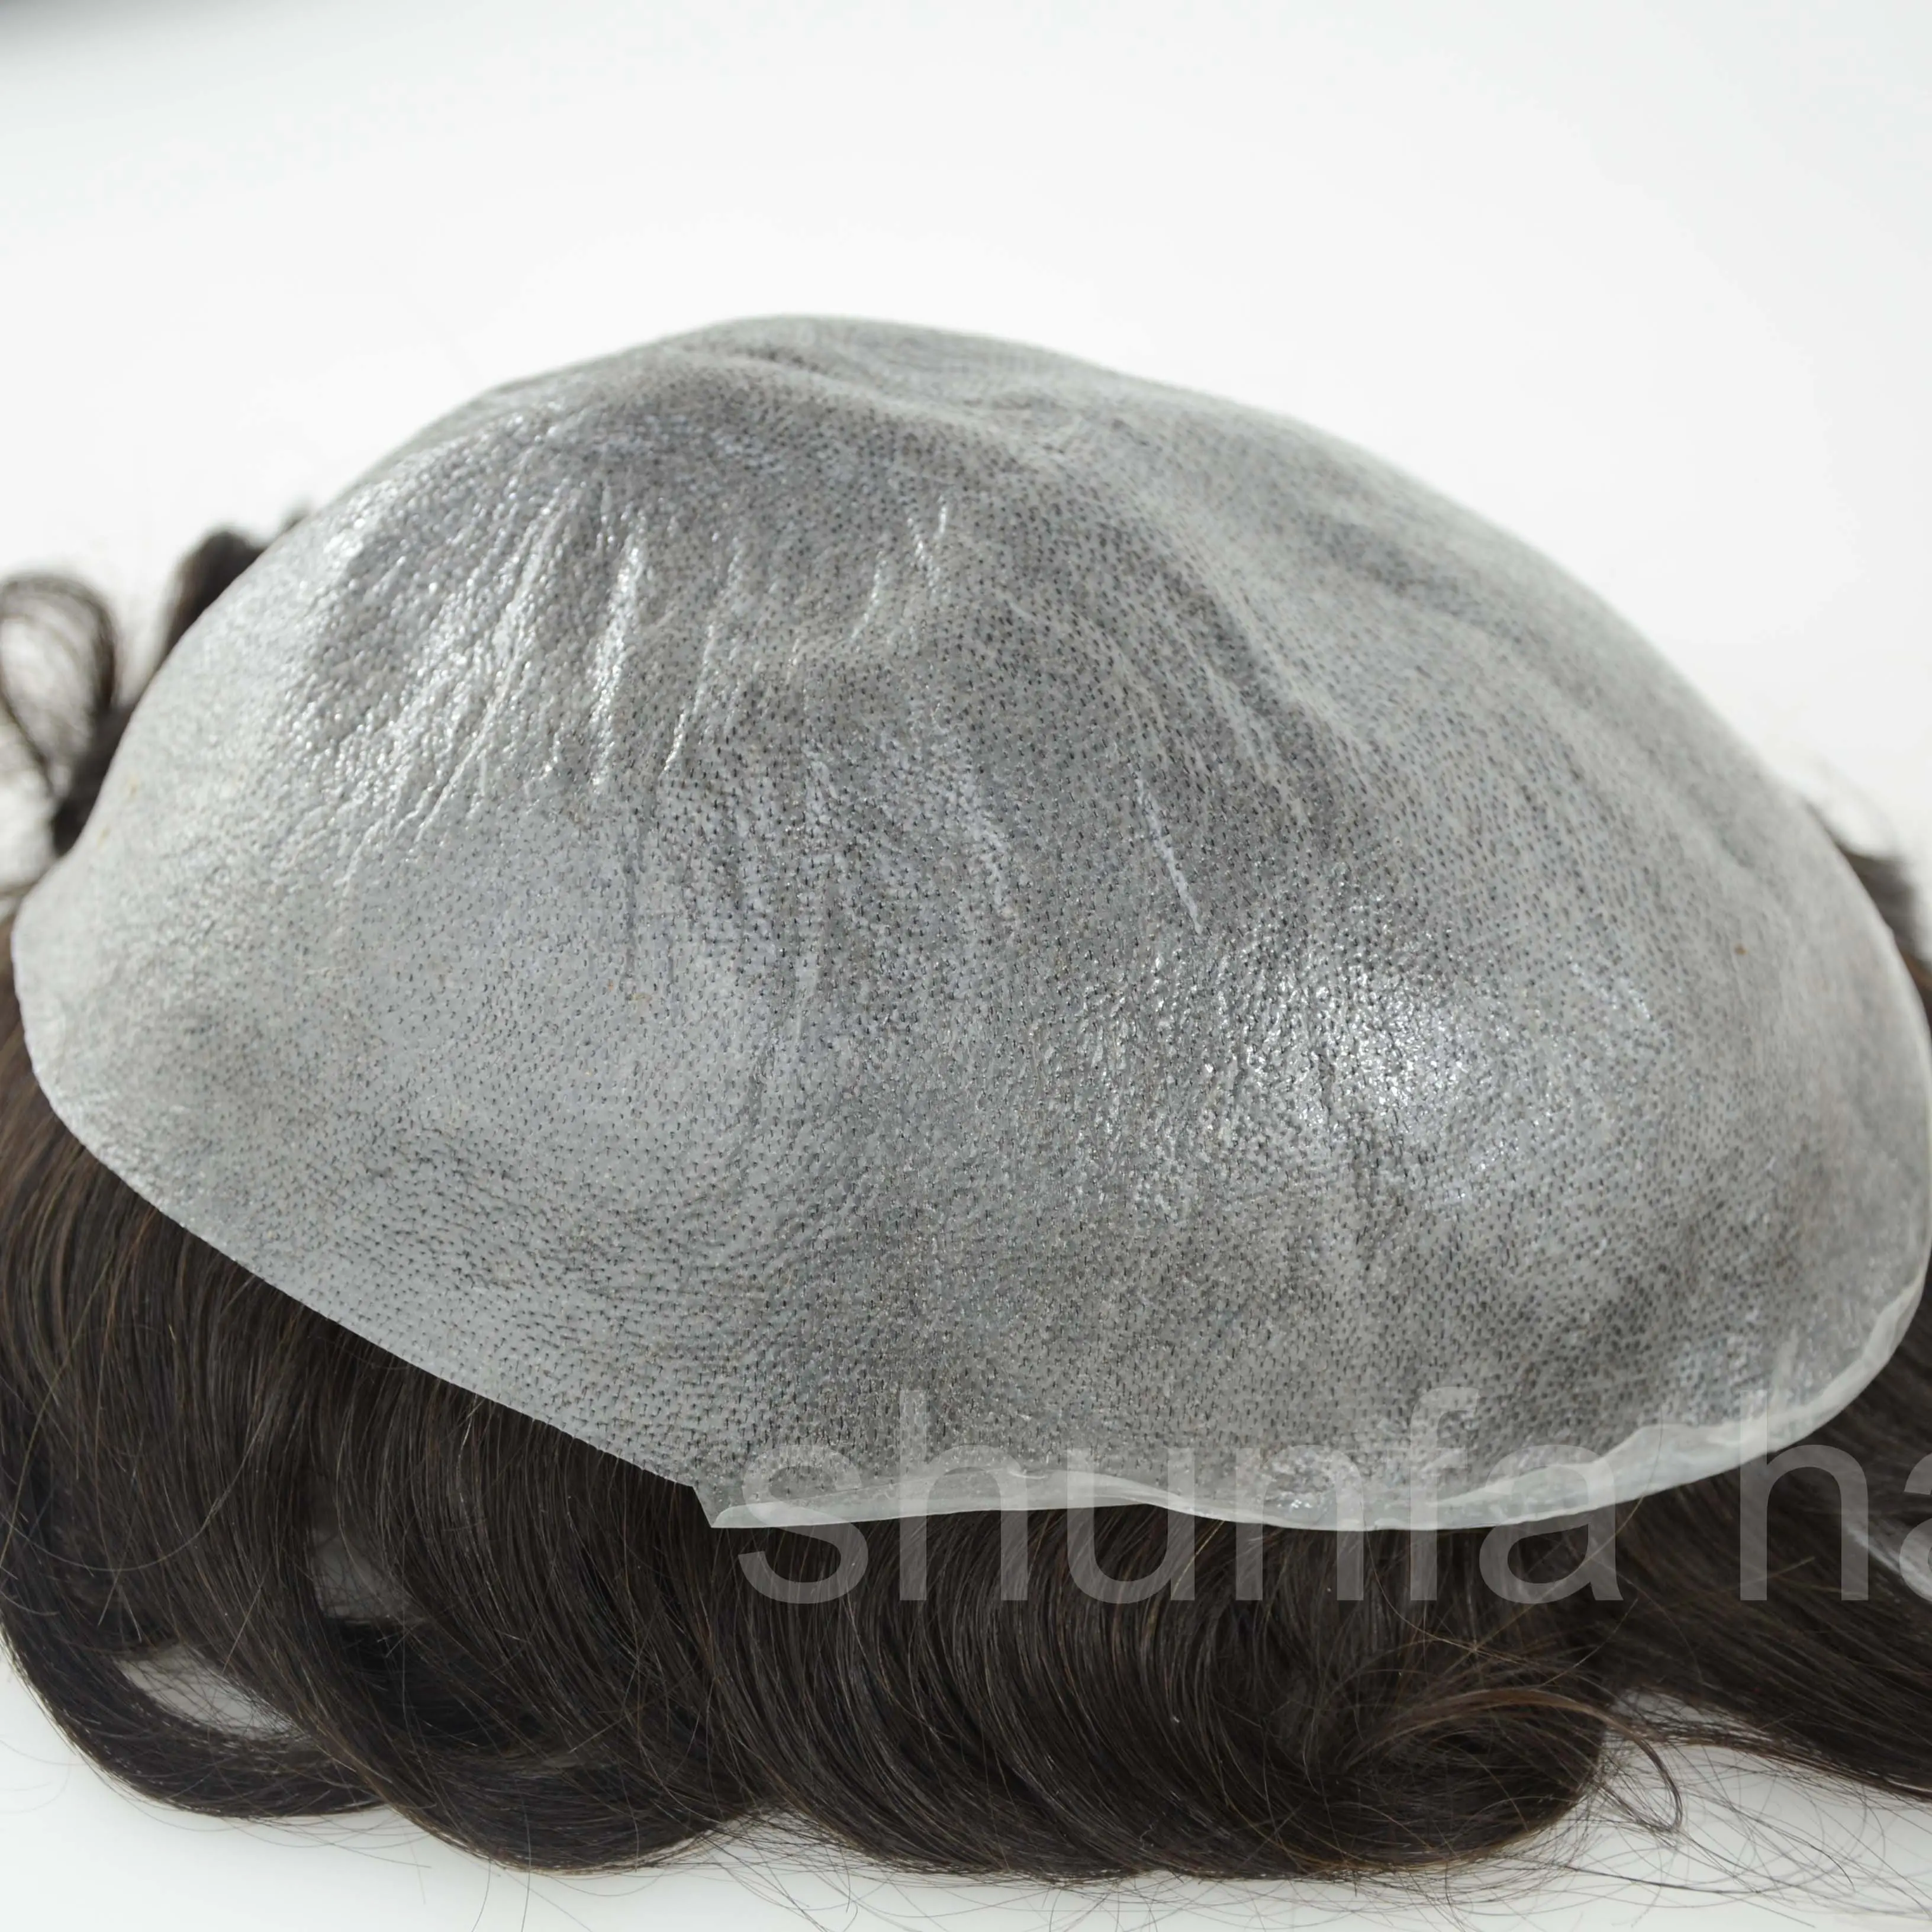 Hair prosthesis wigs